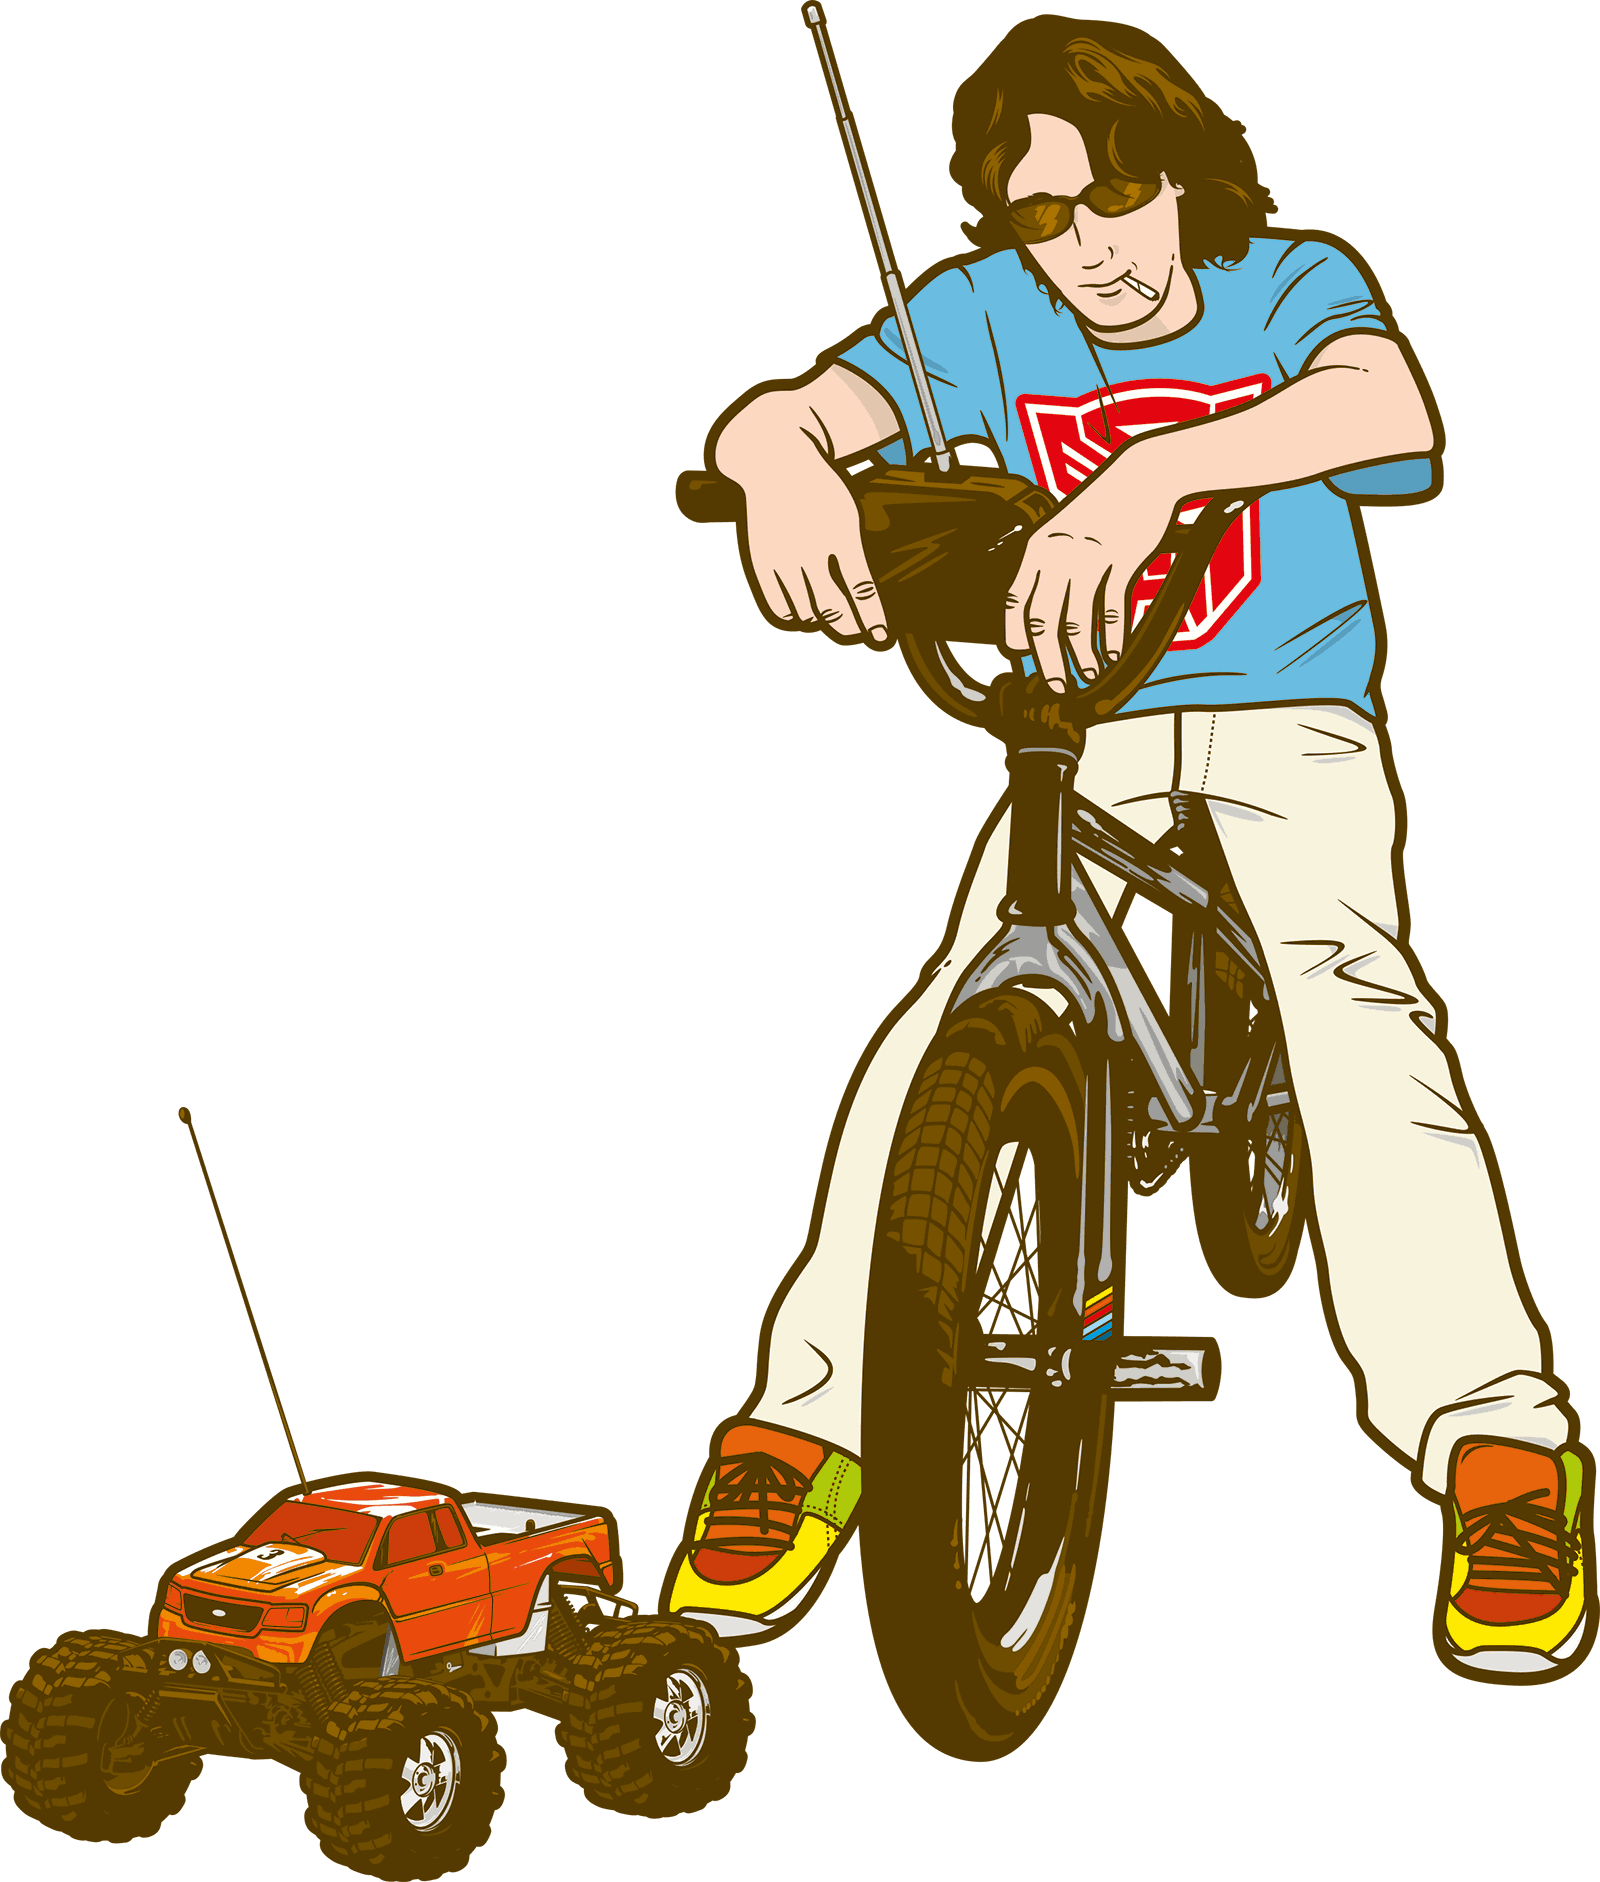 The Big Kid - Boy On A Bike (1600x1882)